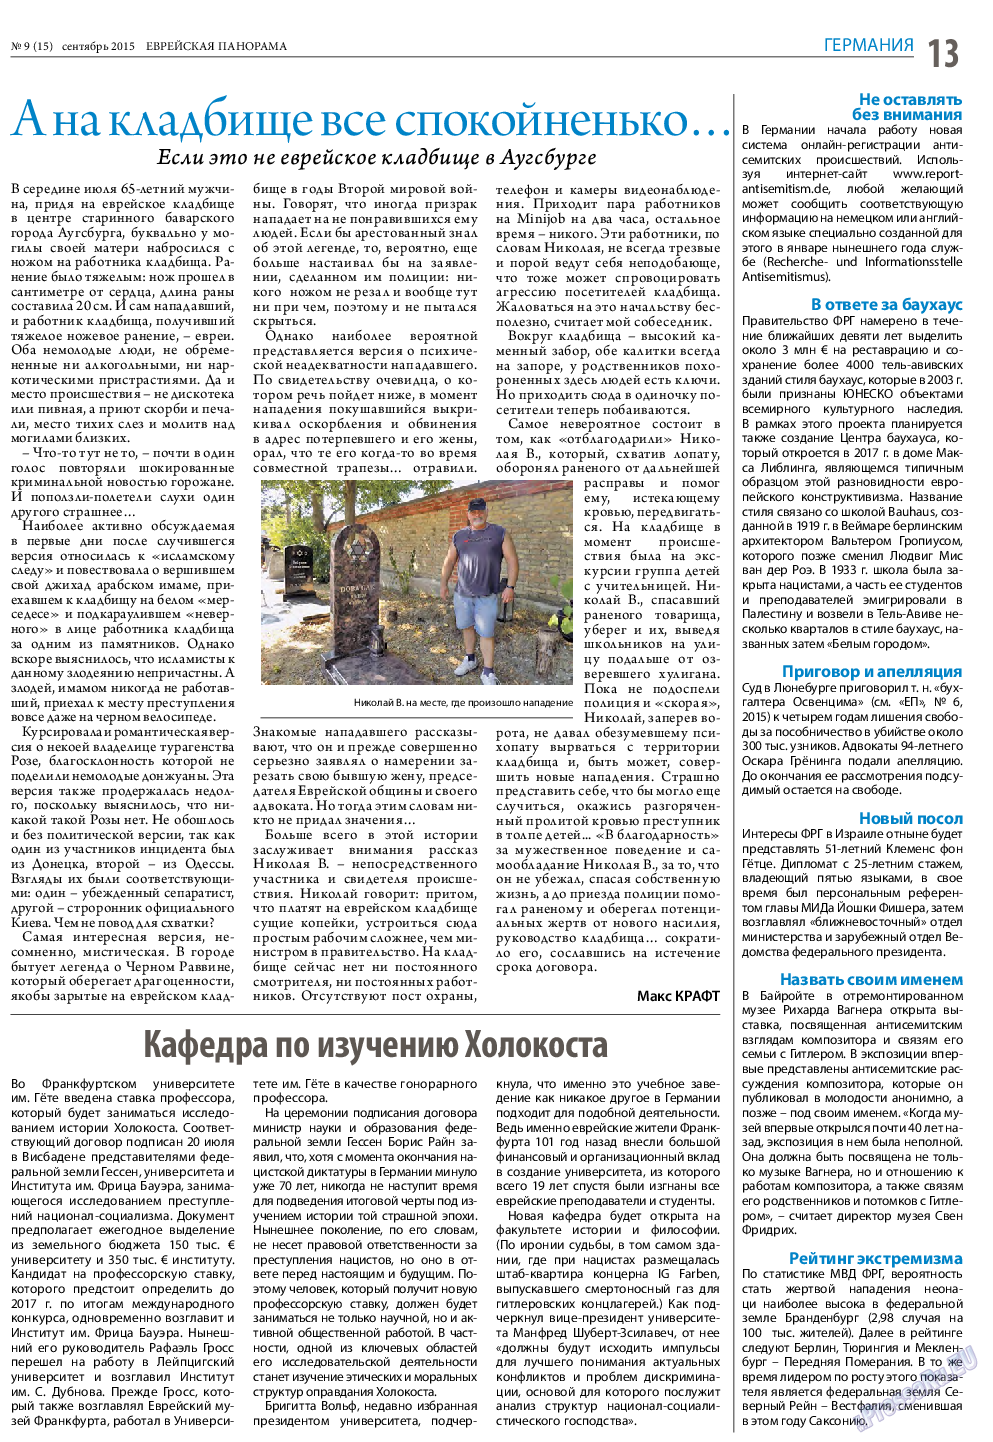 Еврейская панорама, газета. 2015 №9 стр.13